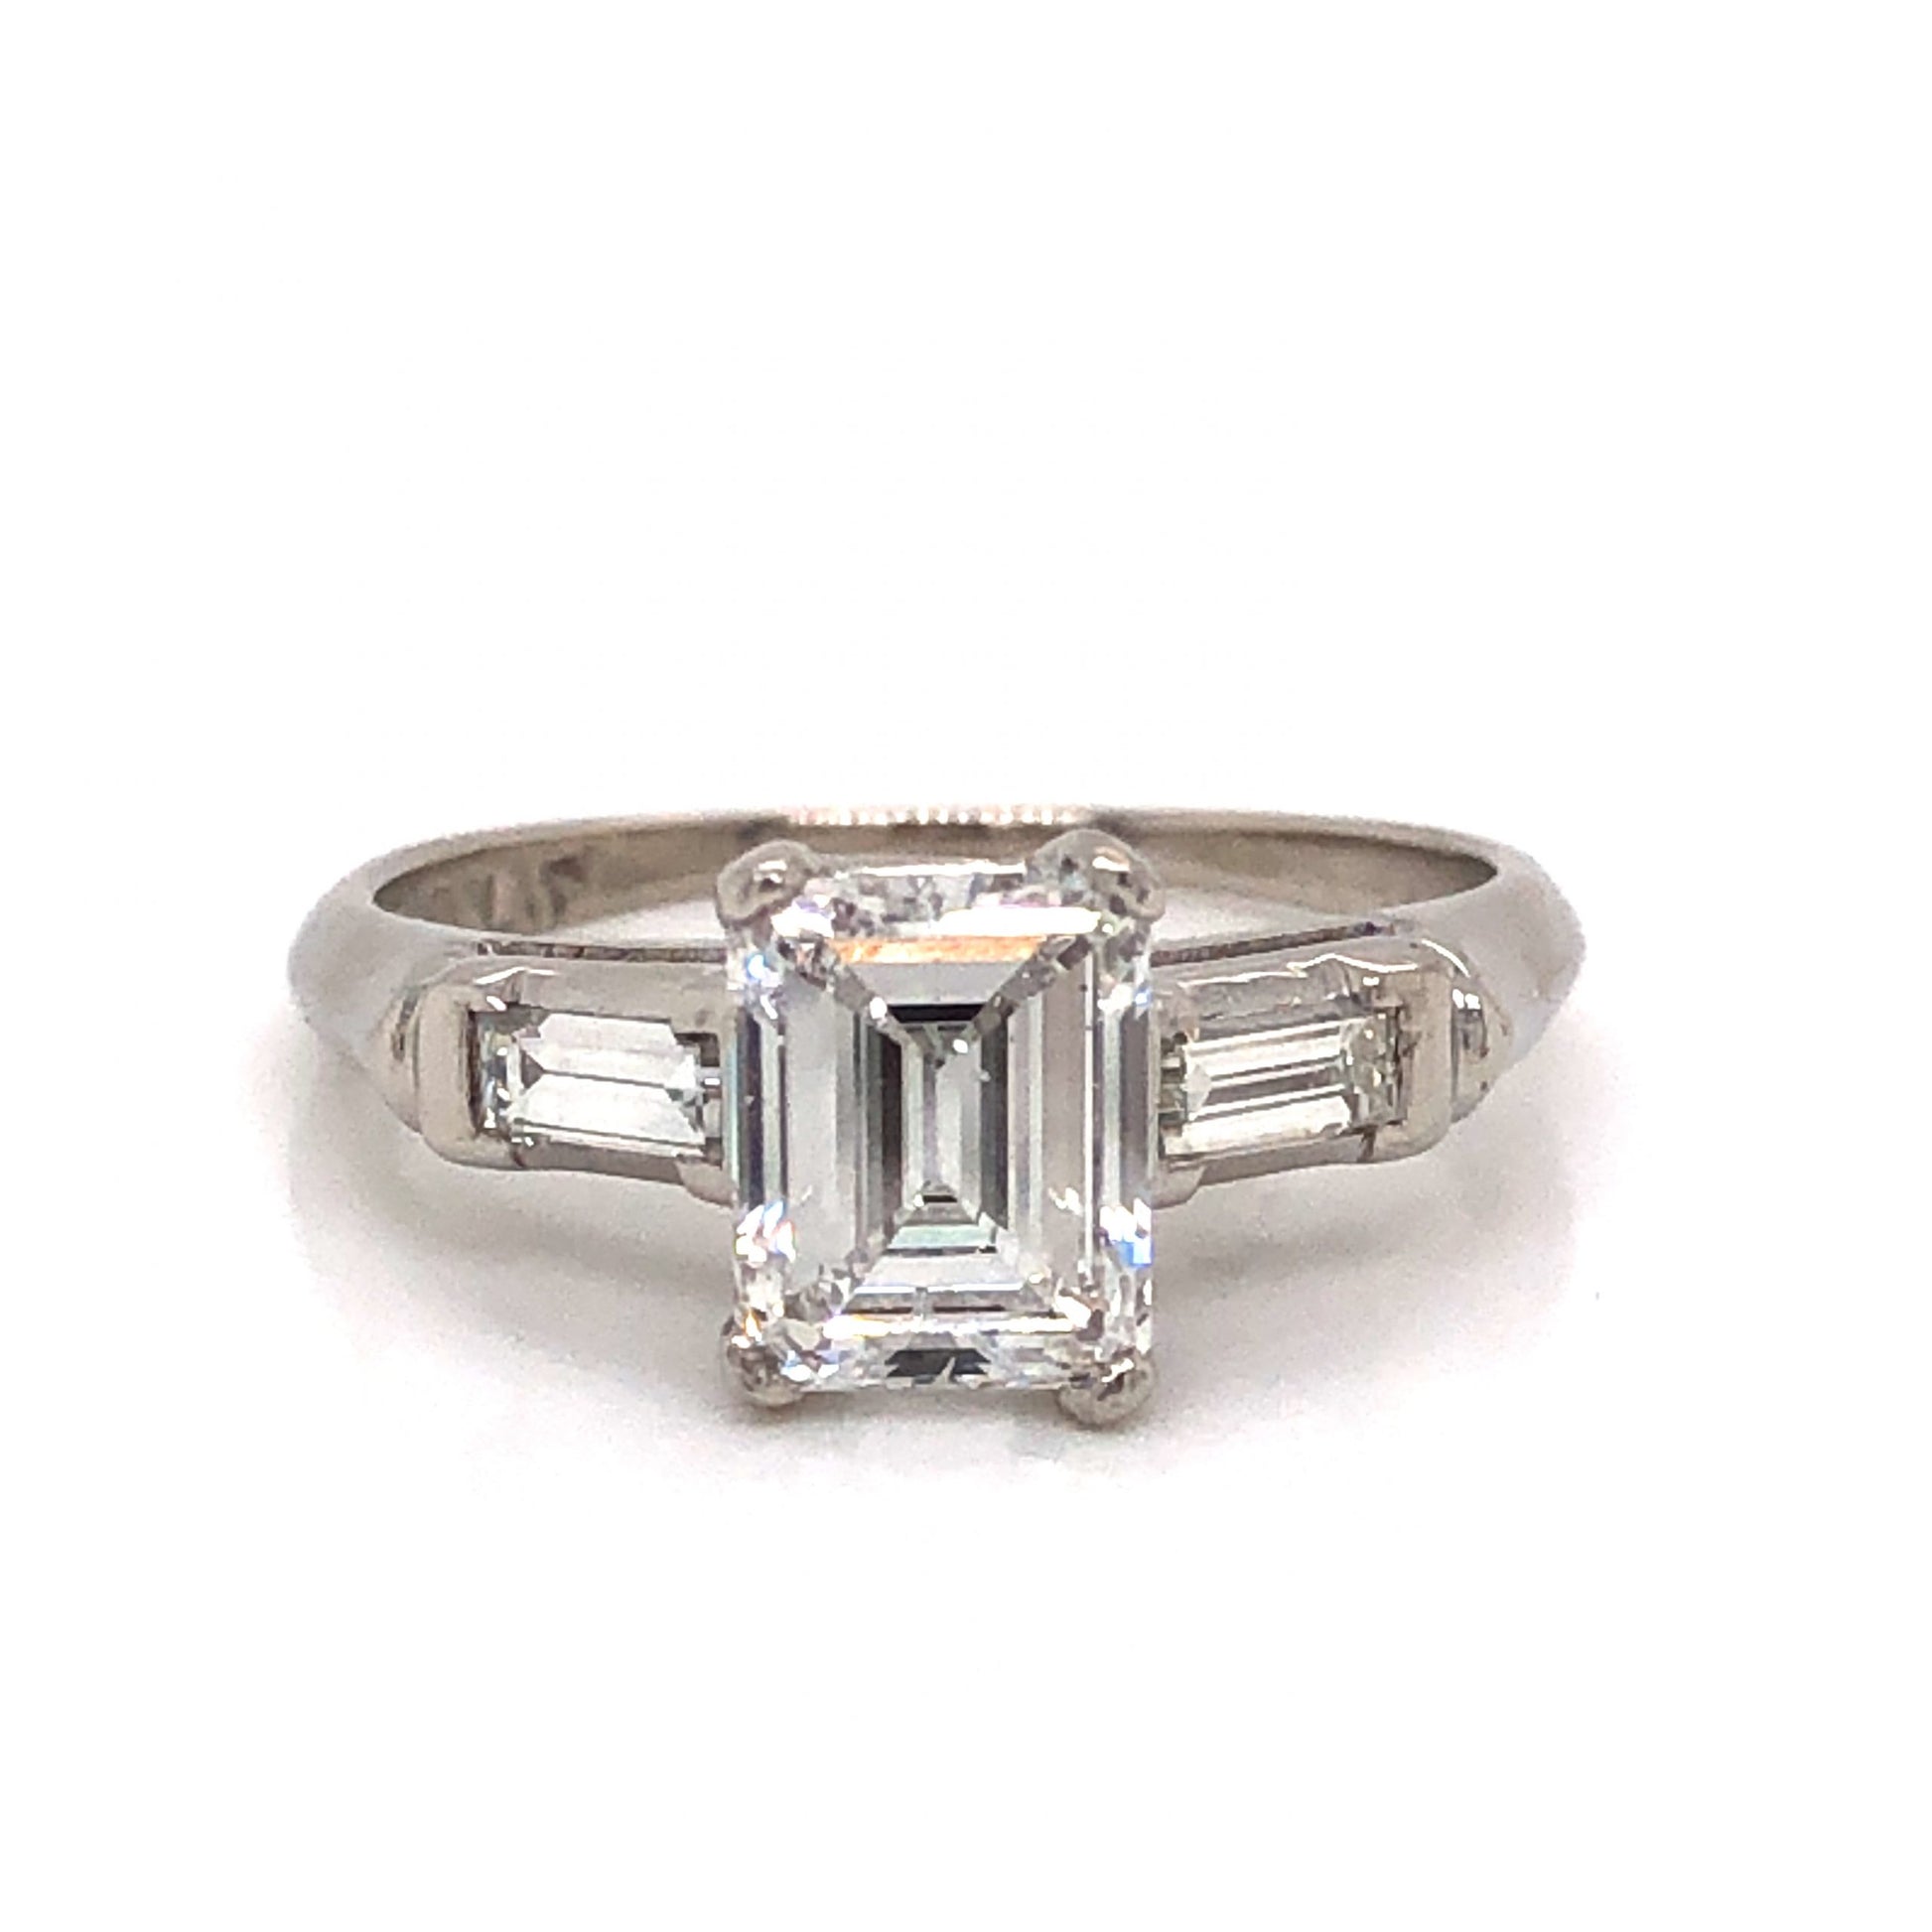 .97 Emerald Cut Art Deco Diamond Engagement Ring in PlatinumComposition: PlatinumRing Size: 4.5Total Diamond Weight: 1.27 ctTotal Gram Weight: 3.5 gInscription: 10% IRID PLAT